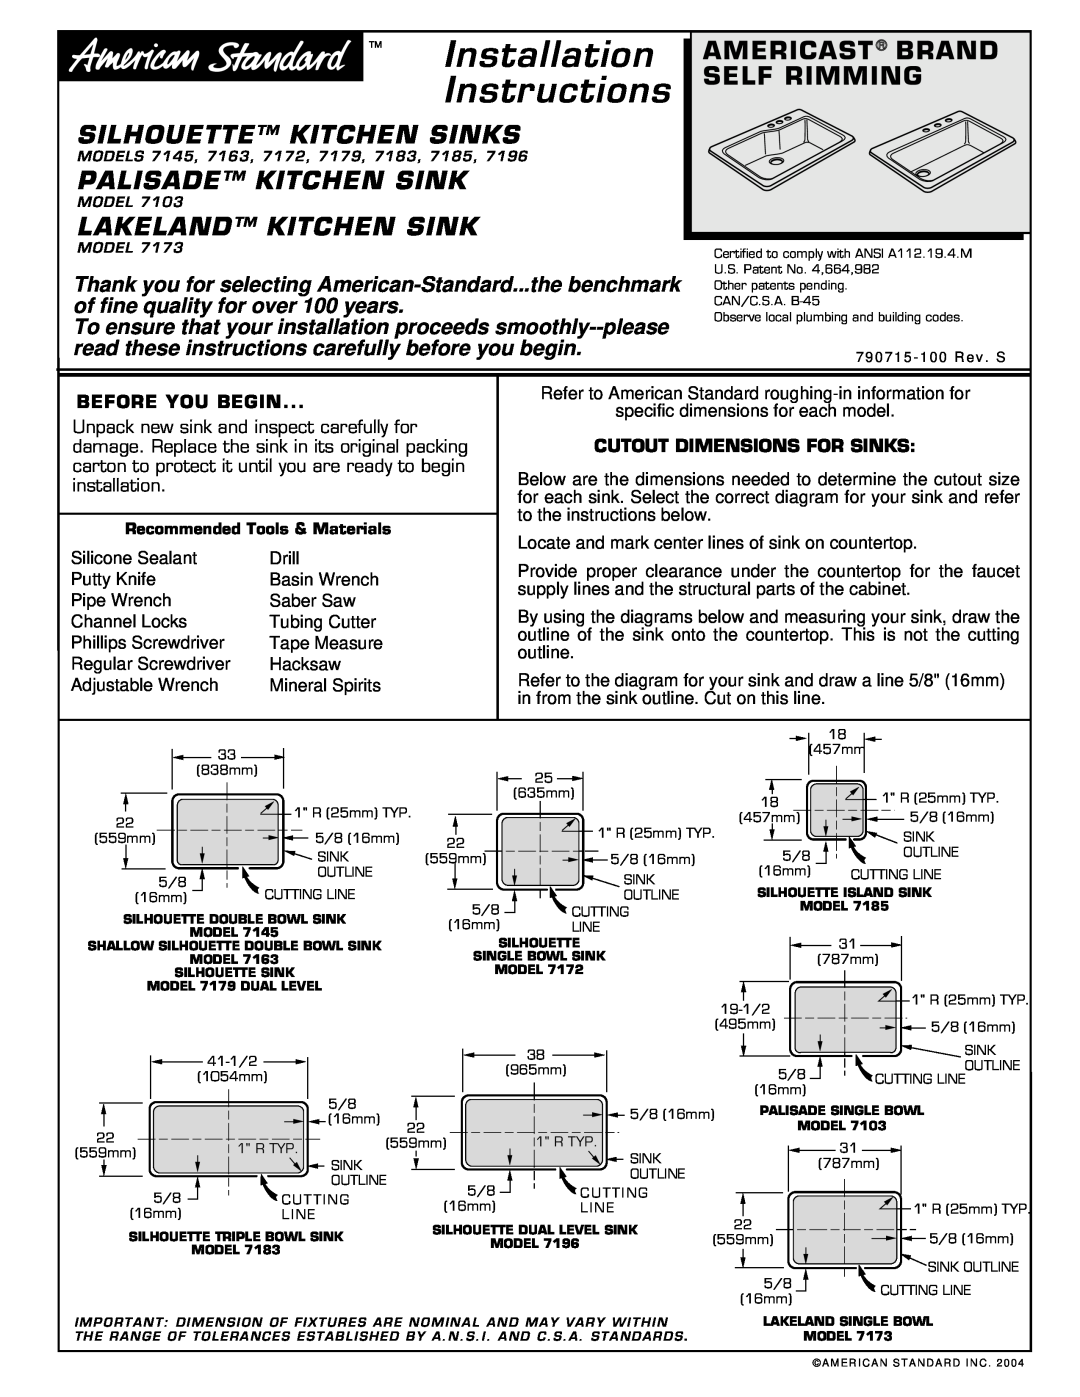 American Standard 7172 installation instructions Installation Instructions, Silhouette Kitchen Sinks, Americast Brand 